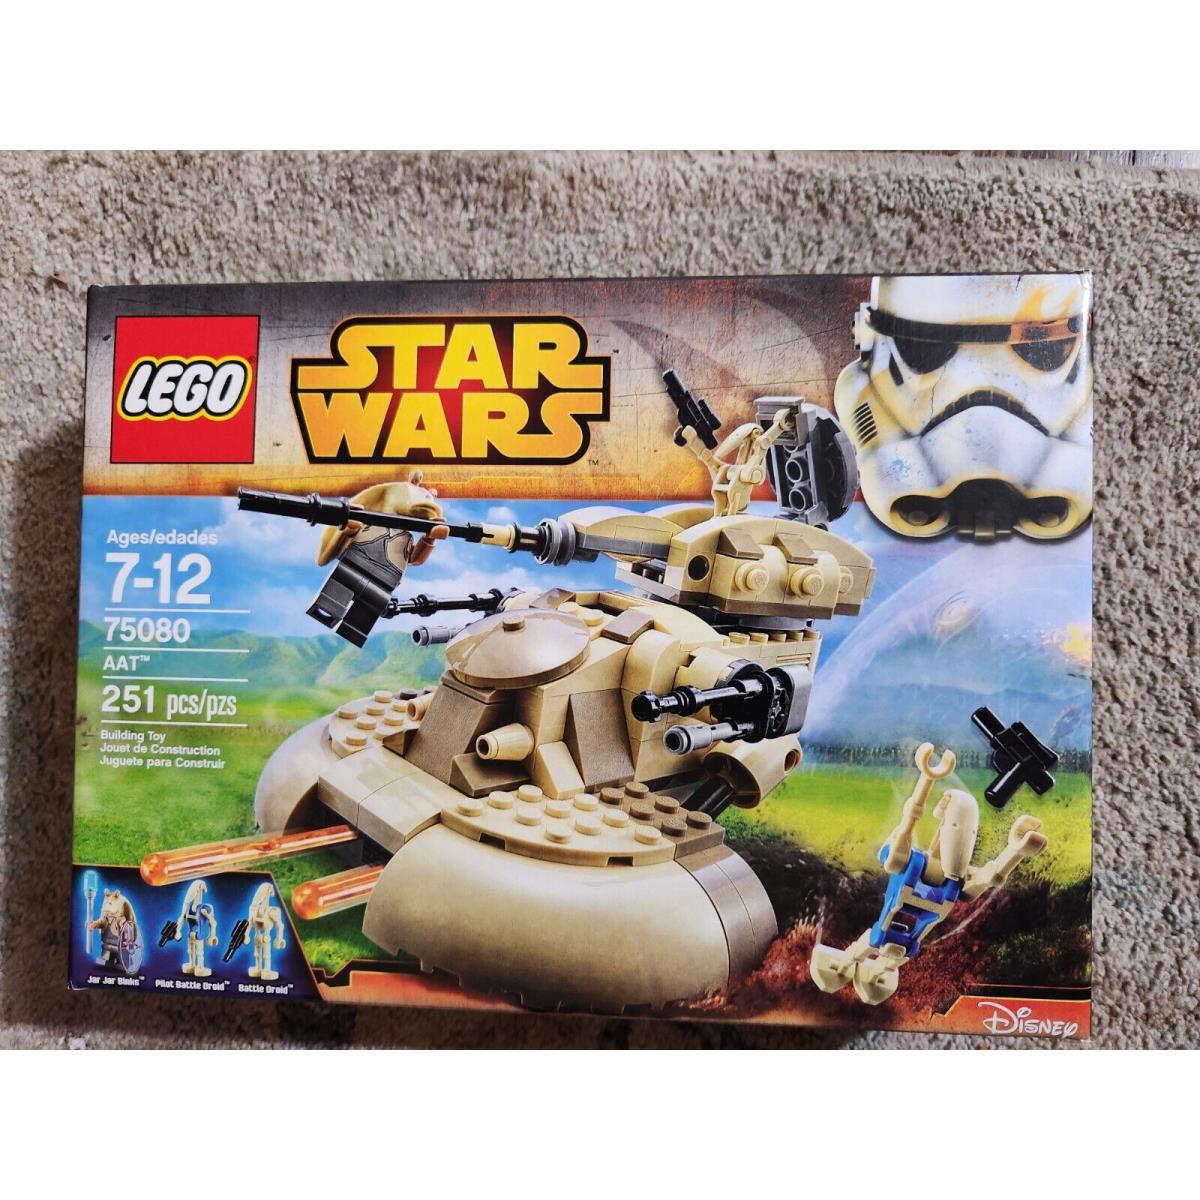 Lego Star Wars 75080 Aat